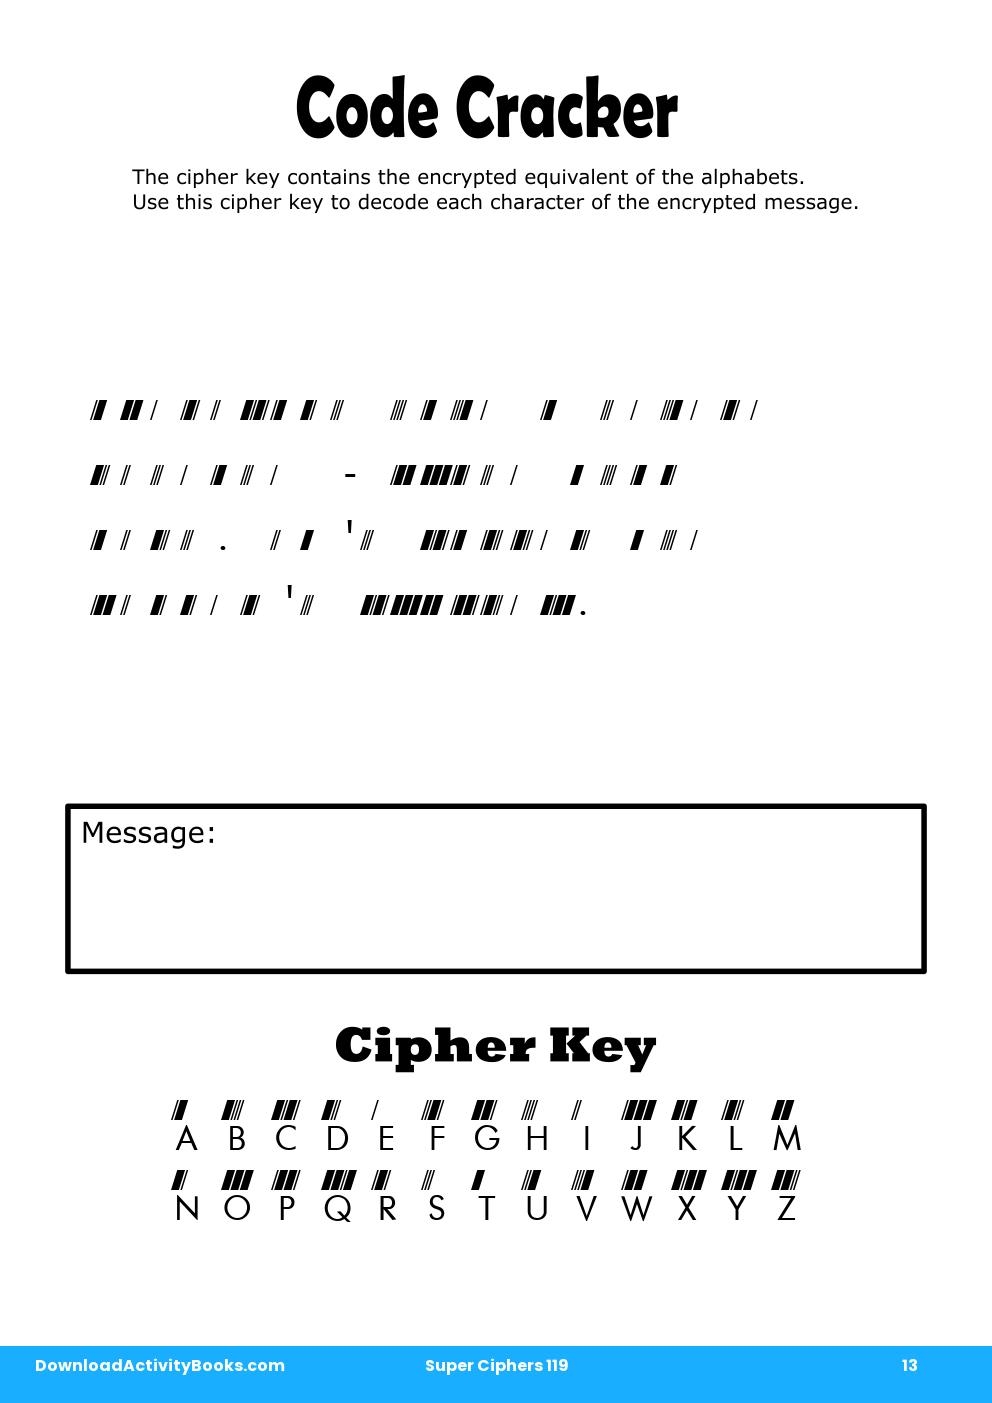 Code Cracker in Super Ciphers 119